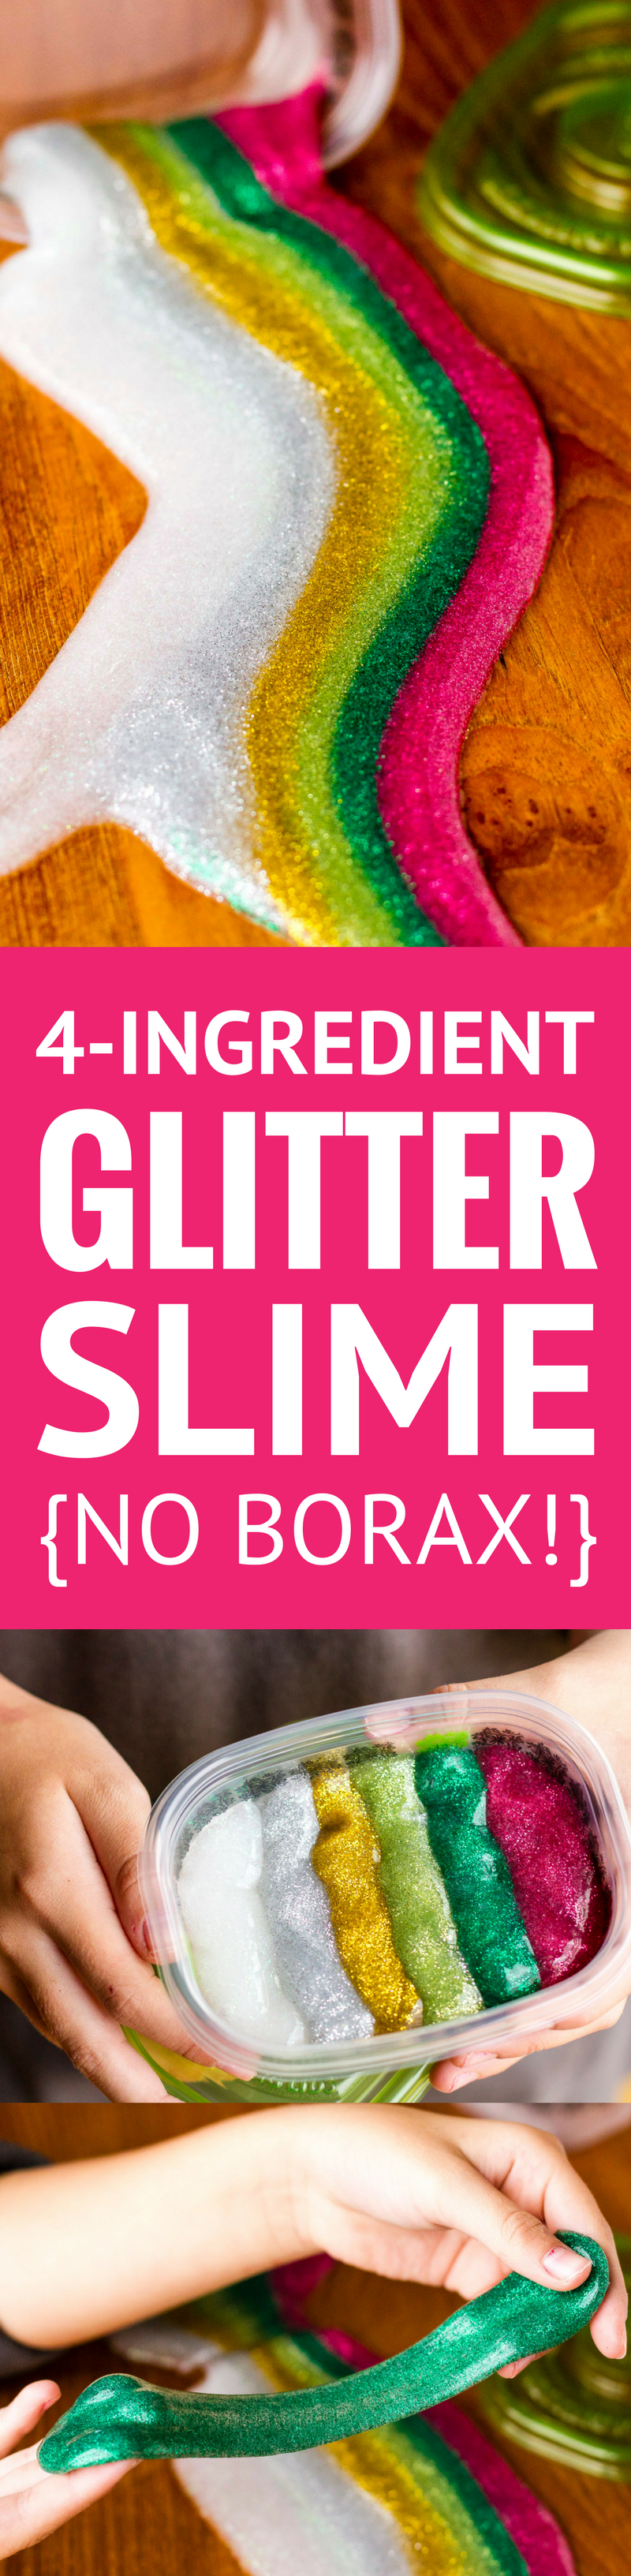 Glitter Slime Recipe — whether you make rainbow glitter slime or your own custom homemade glitter slime, this simple 4-ingredient